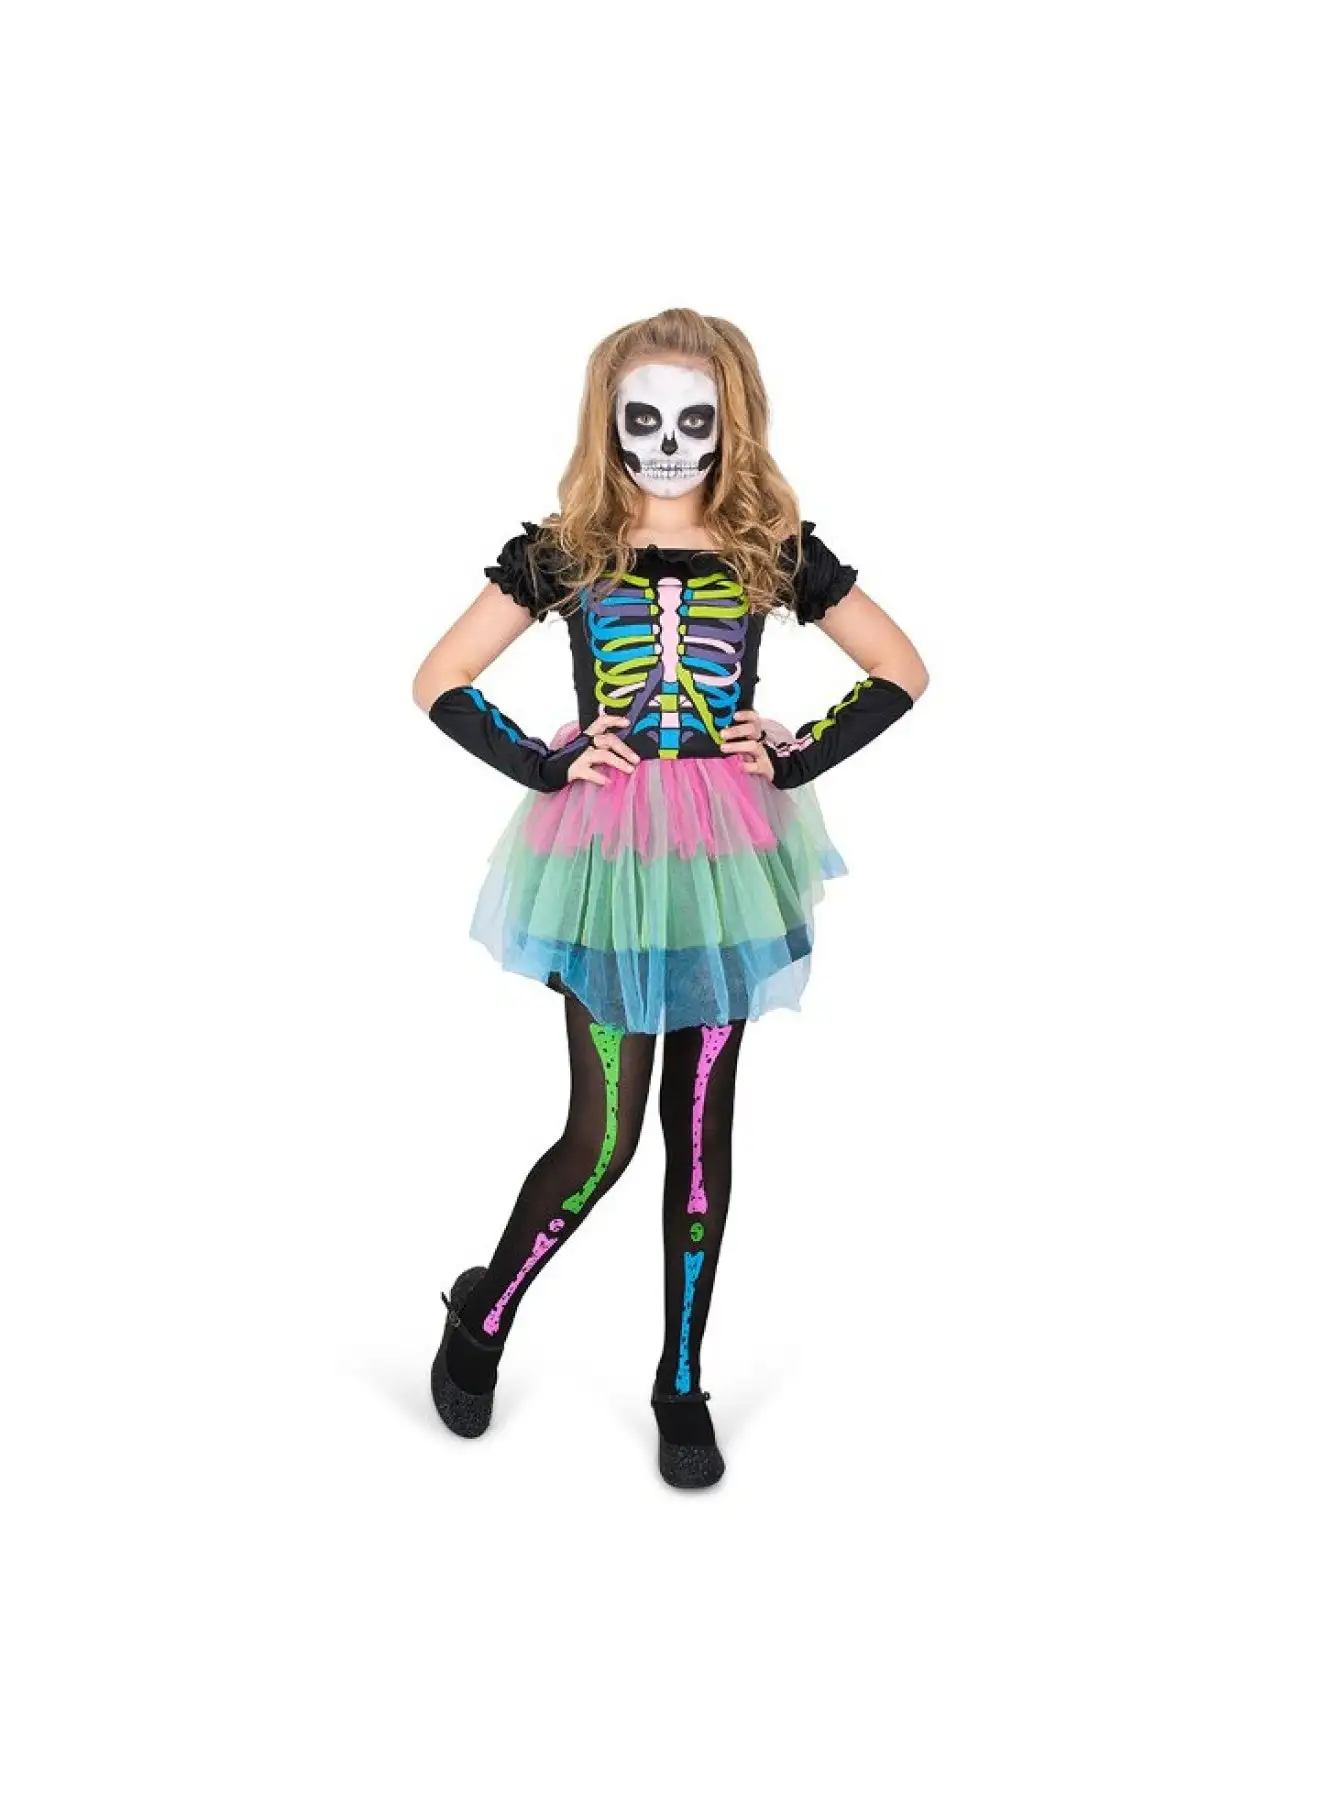 MAD TOYS Neon Skeleton Tutu Dress Kids Halloween Costume